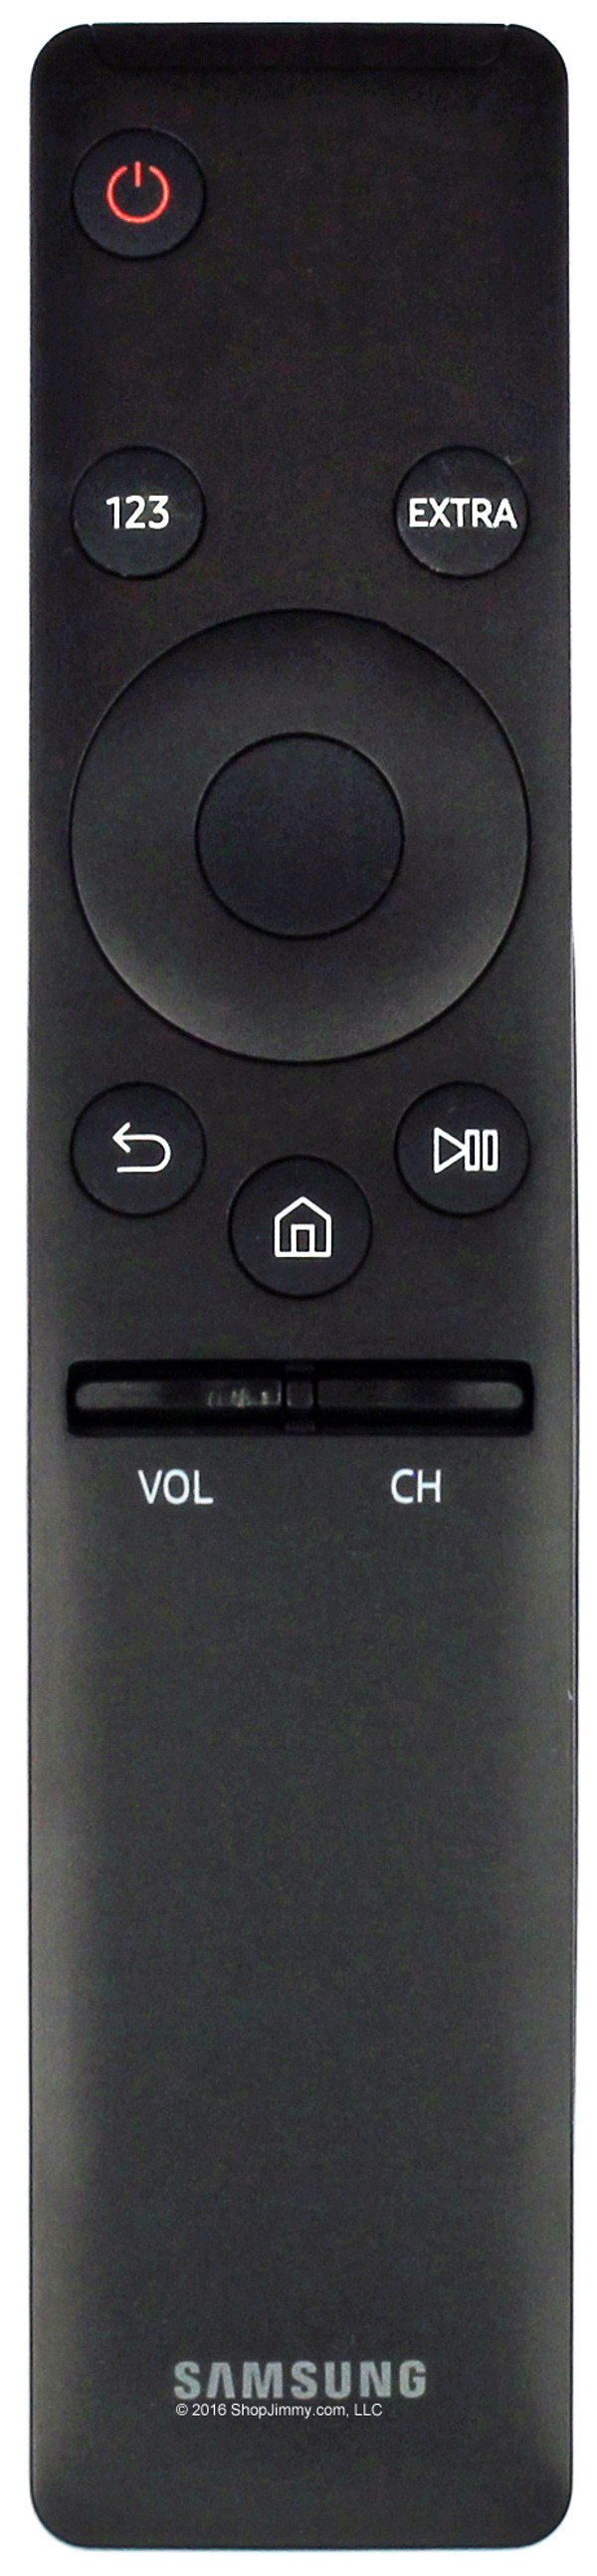 Samsung BN59-01260A Remote Control-- Open Bag